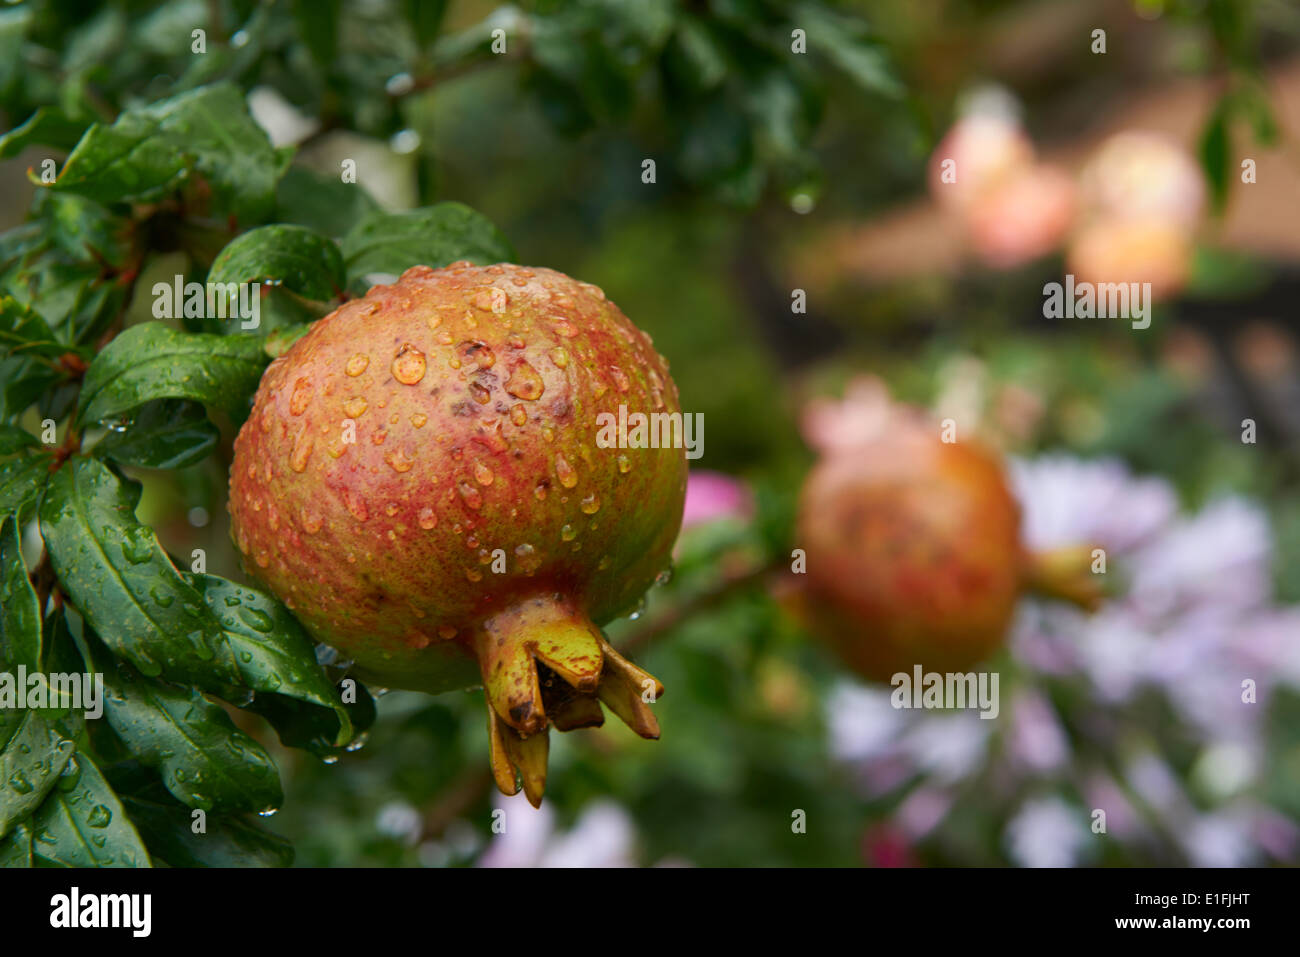 pomegranate Punica granatum Stock Photo